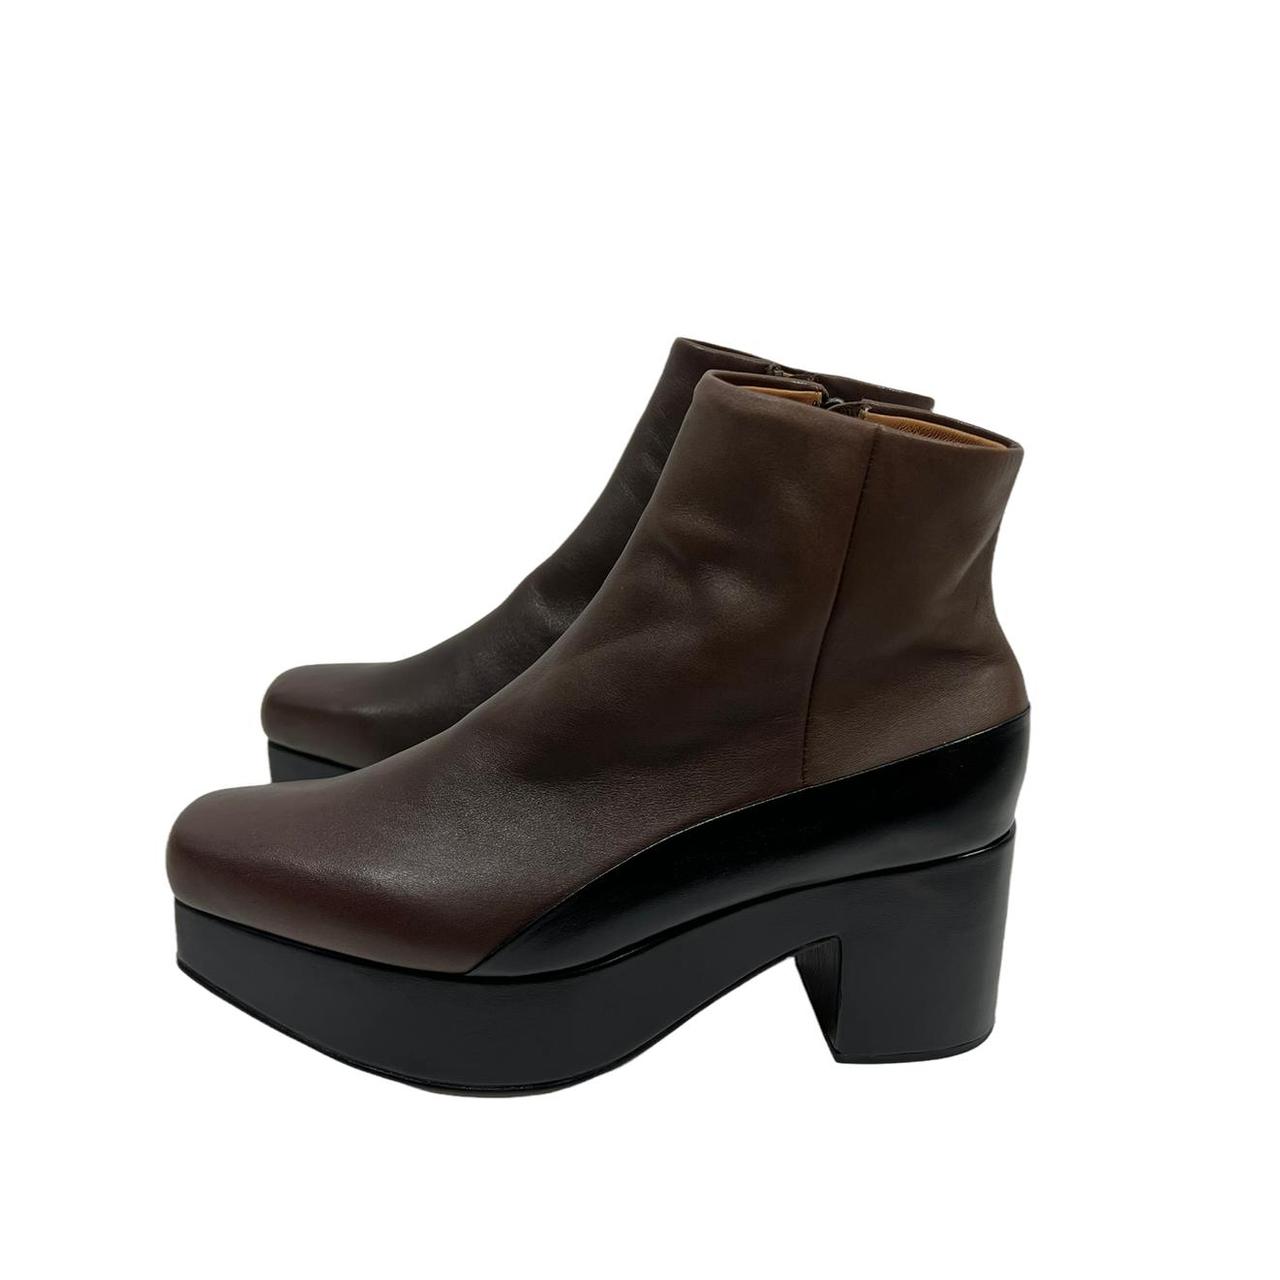 Rachel Comey Women's Brown and Black Boots (3)